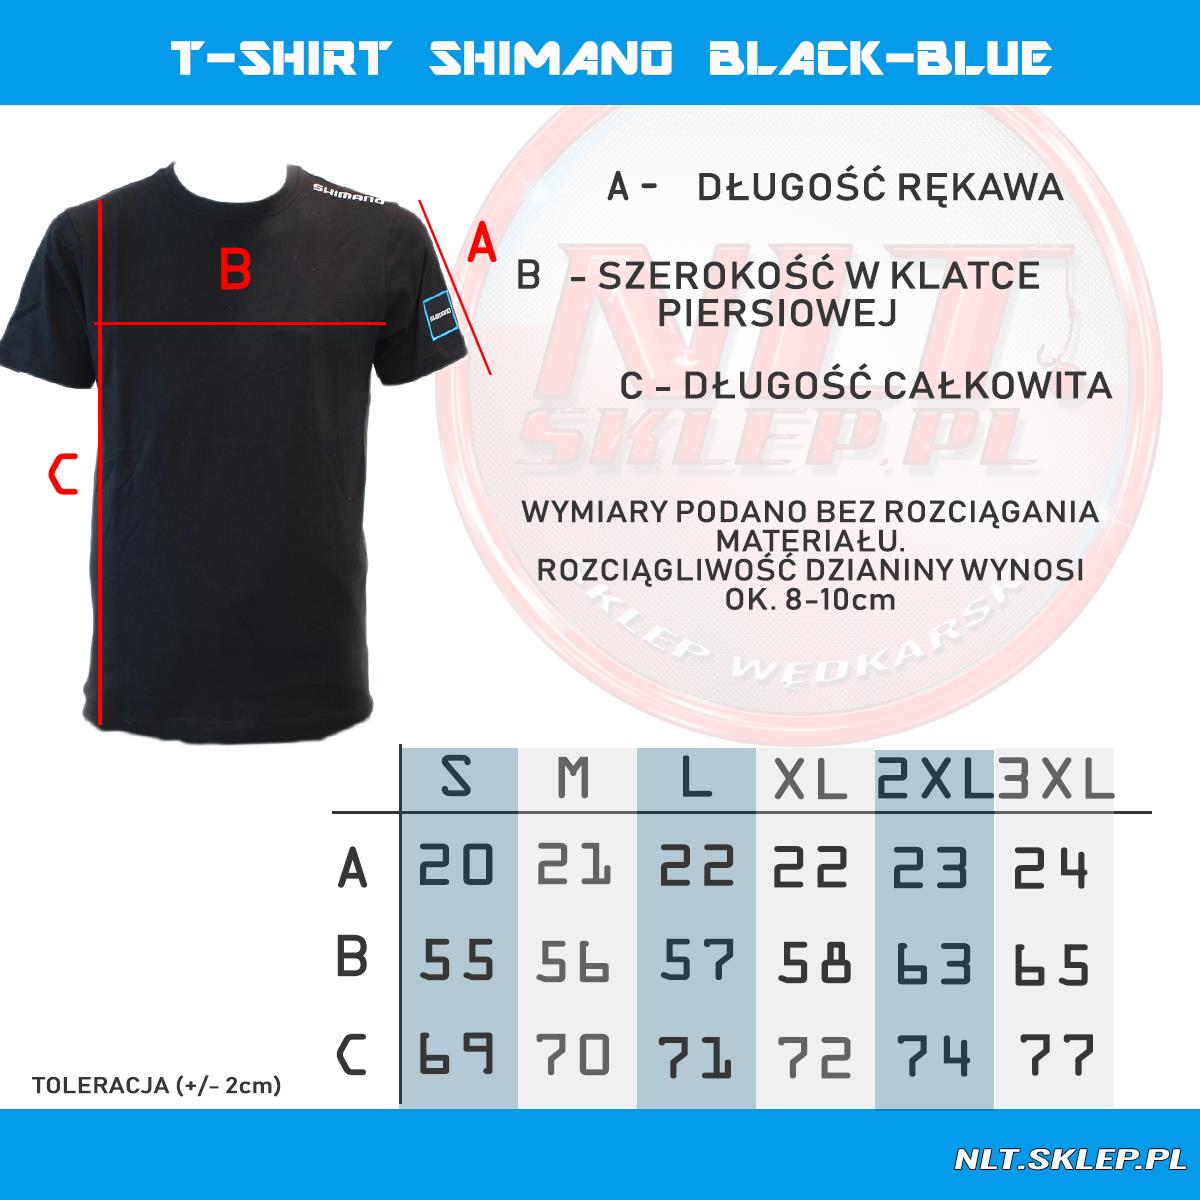 Shimano, ubrania wędkarskie, no limit team, nlt.sklep.pl, Tribal, T-shirt, koszulka shimano